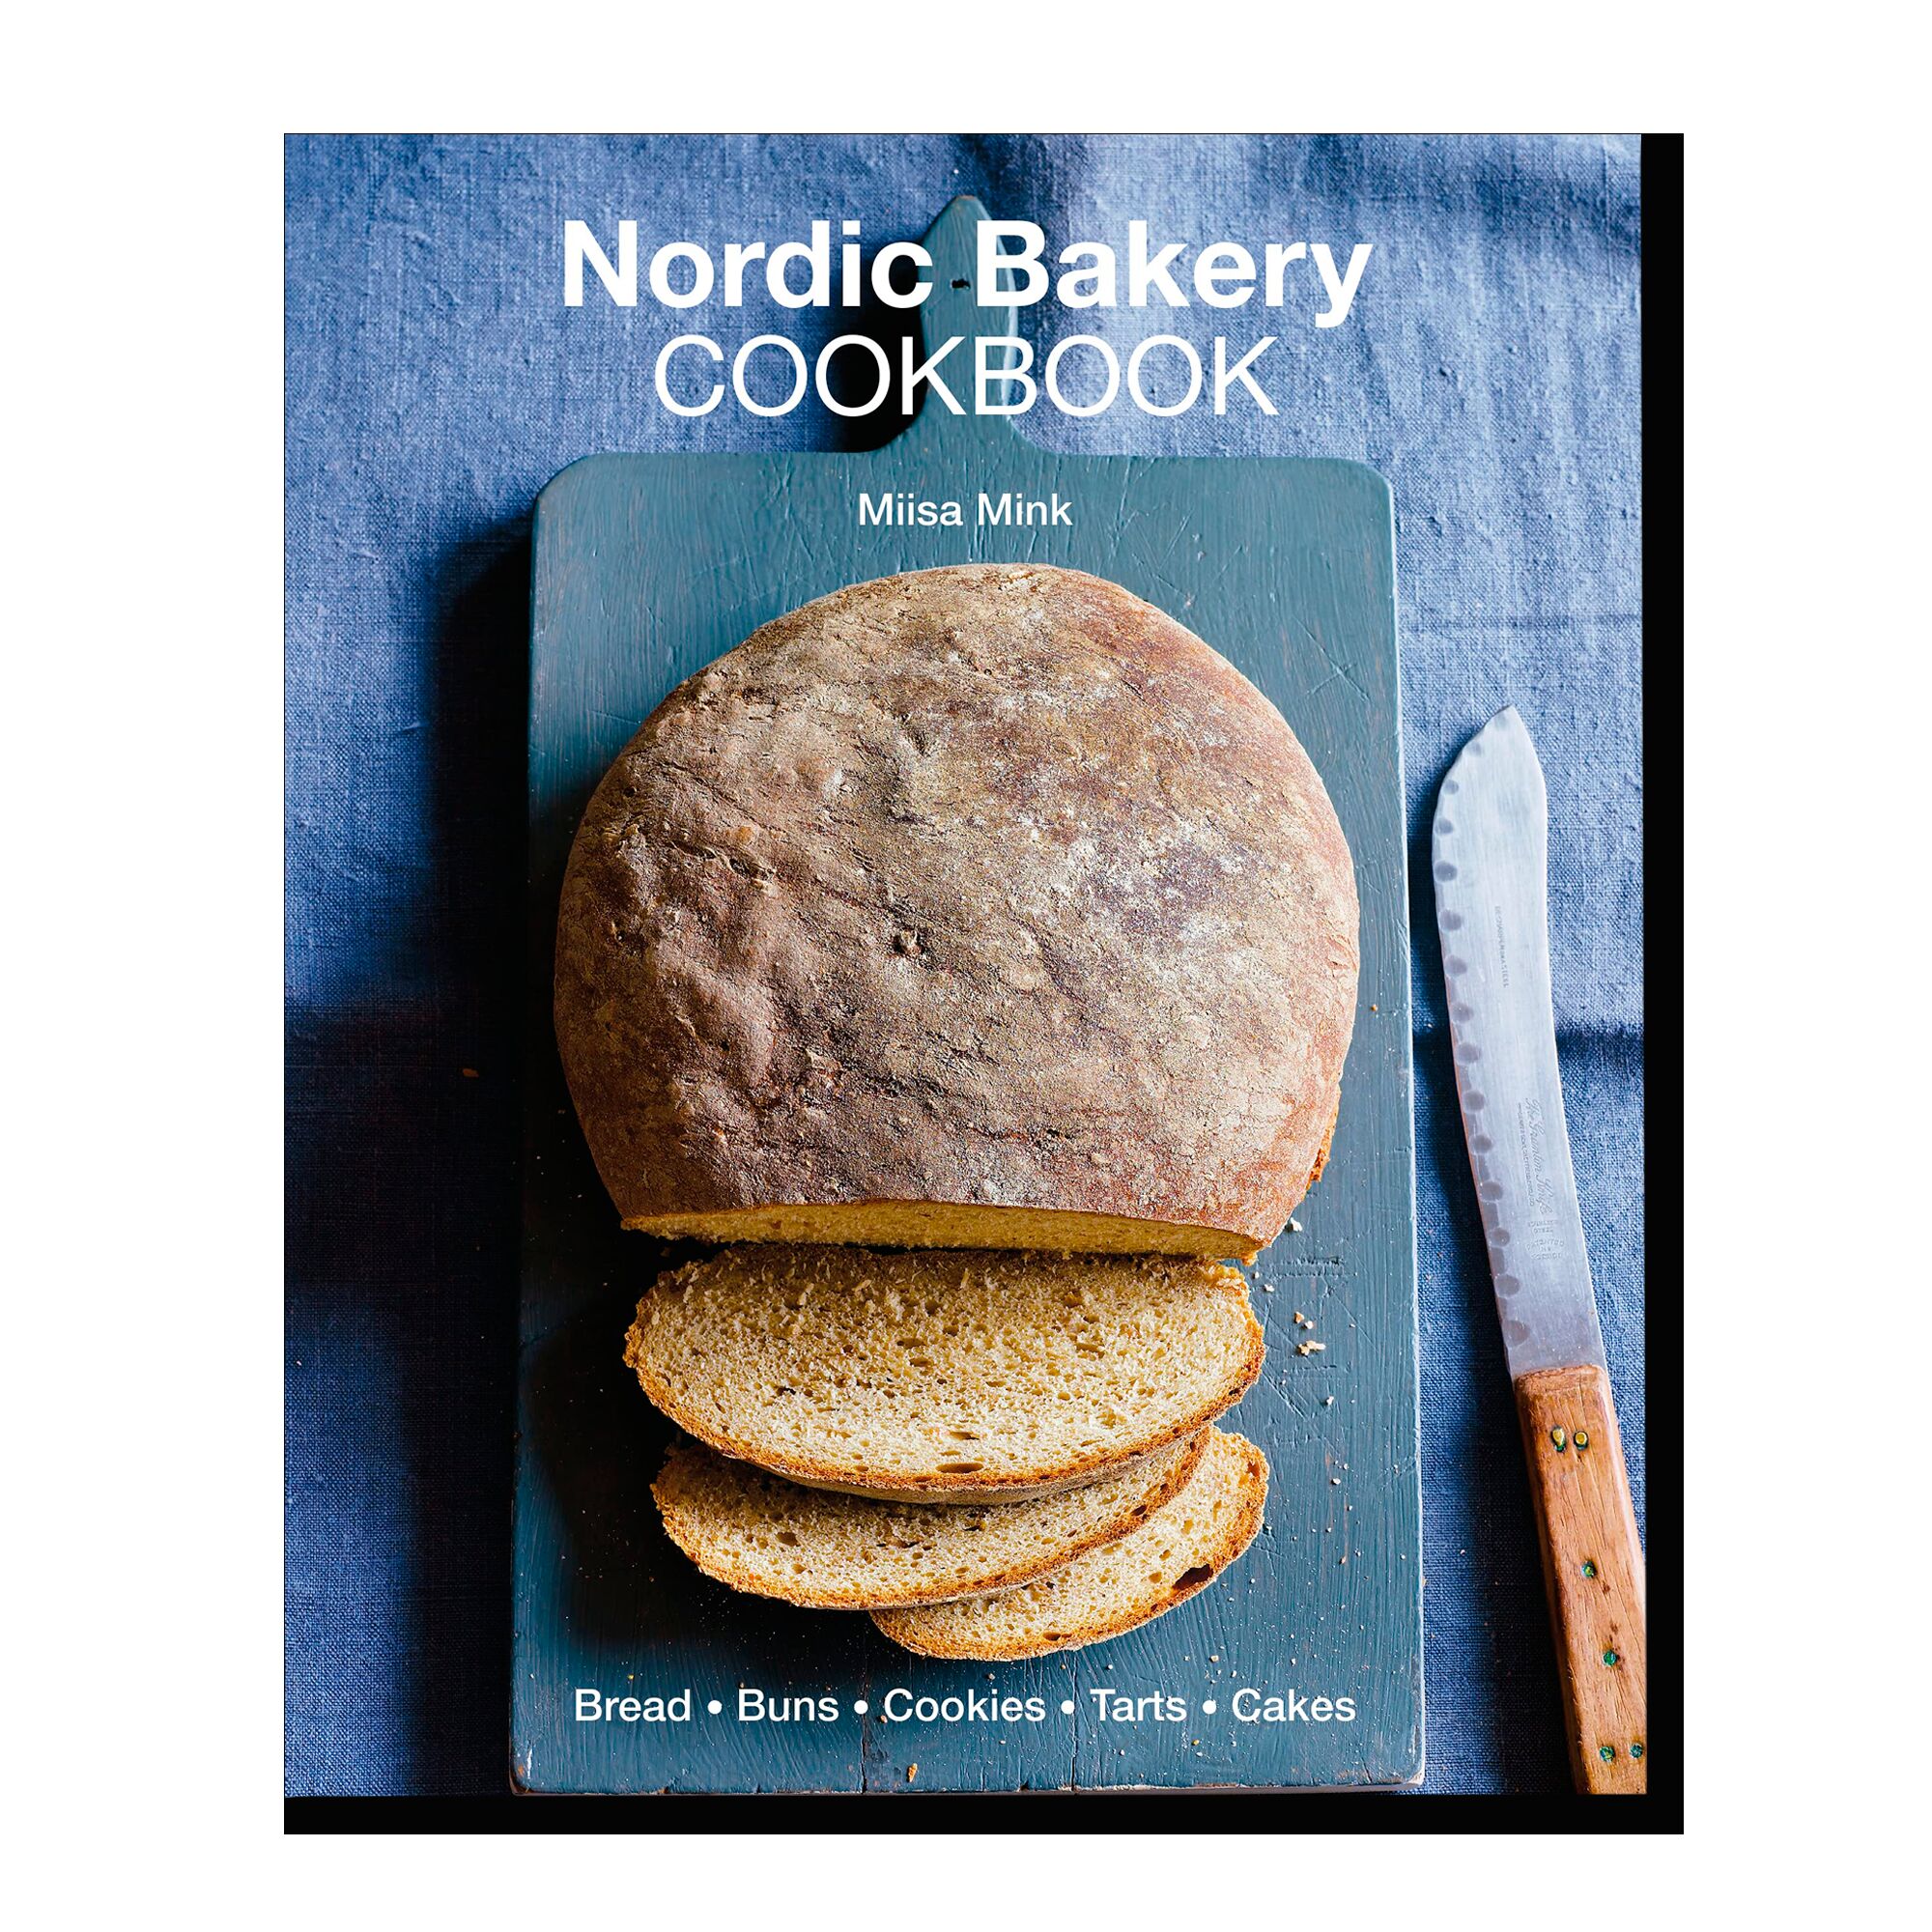 Nordic Bakery Cookbook by Miisa Mink (Ryland Peters & Small)